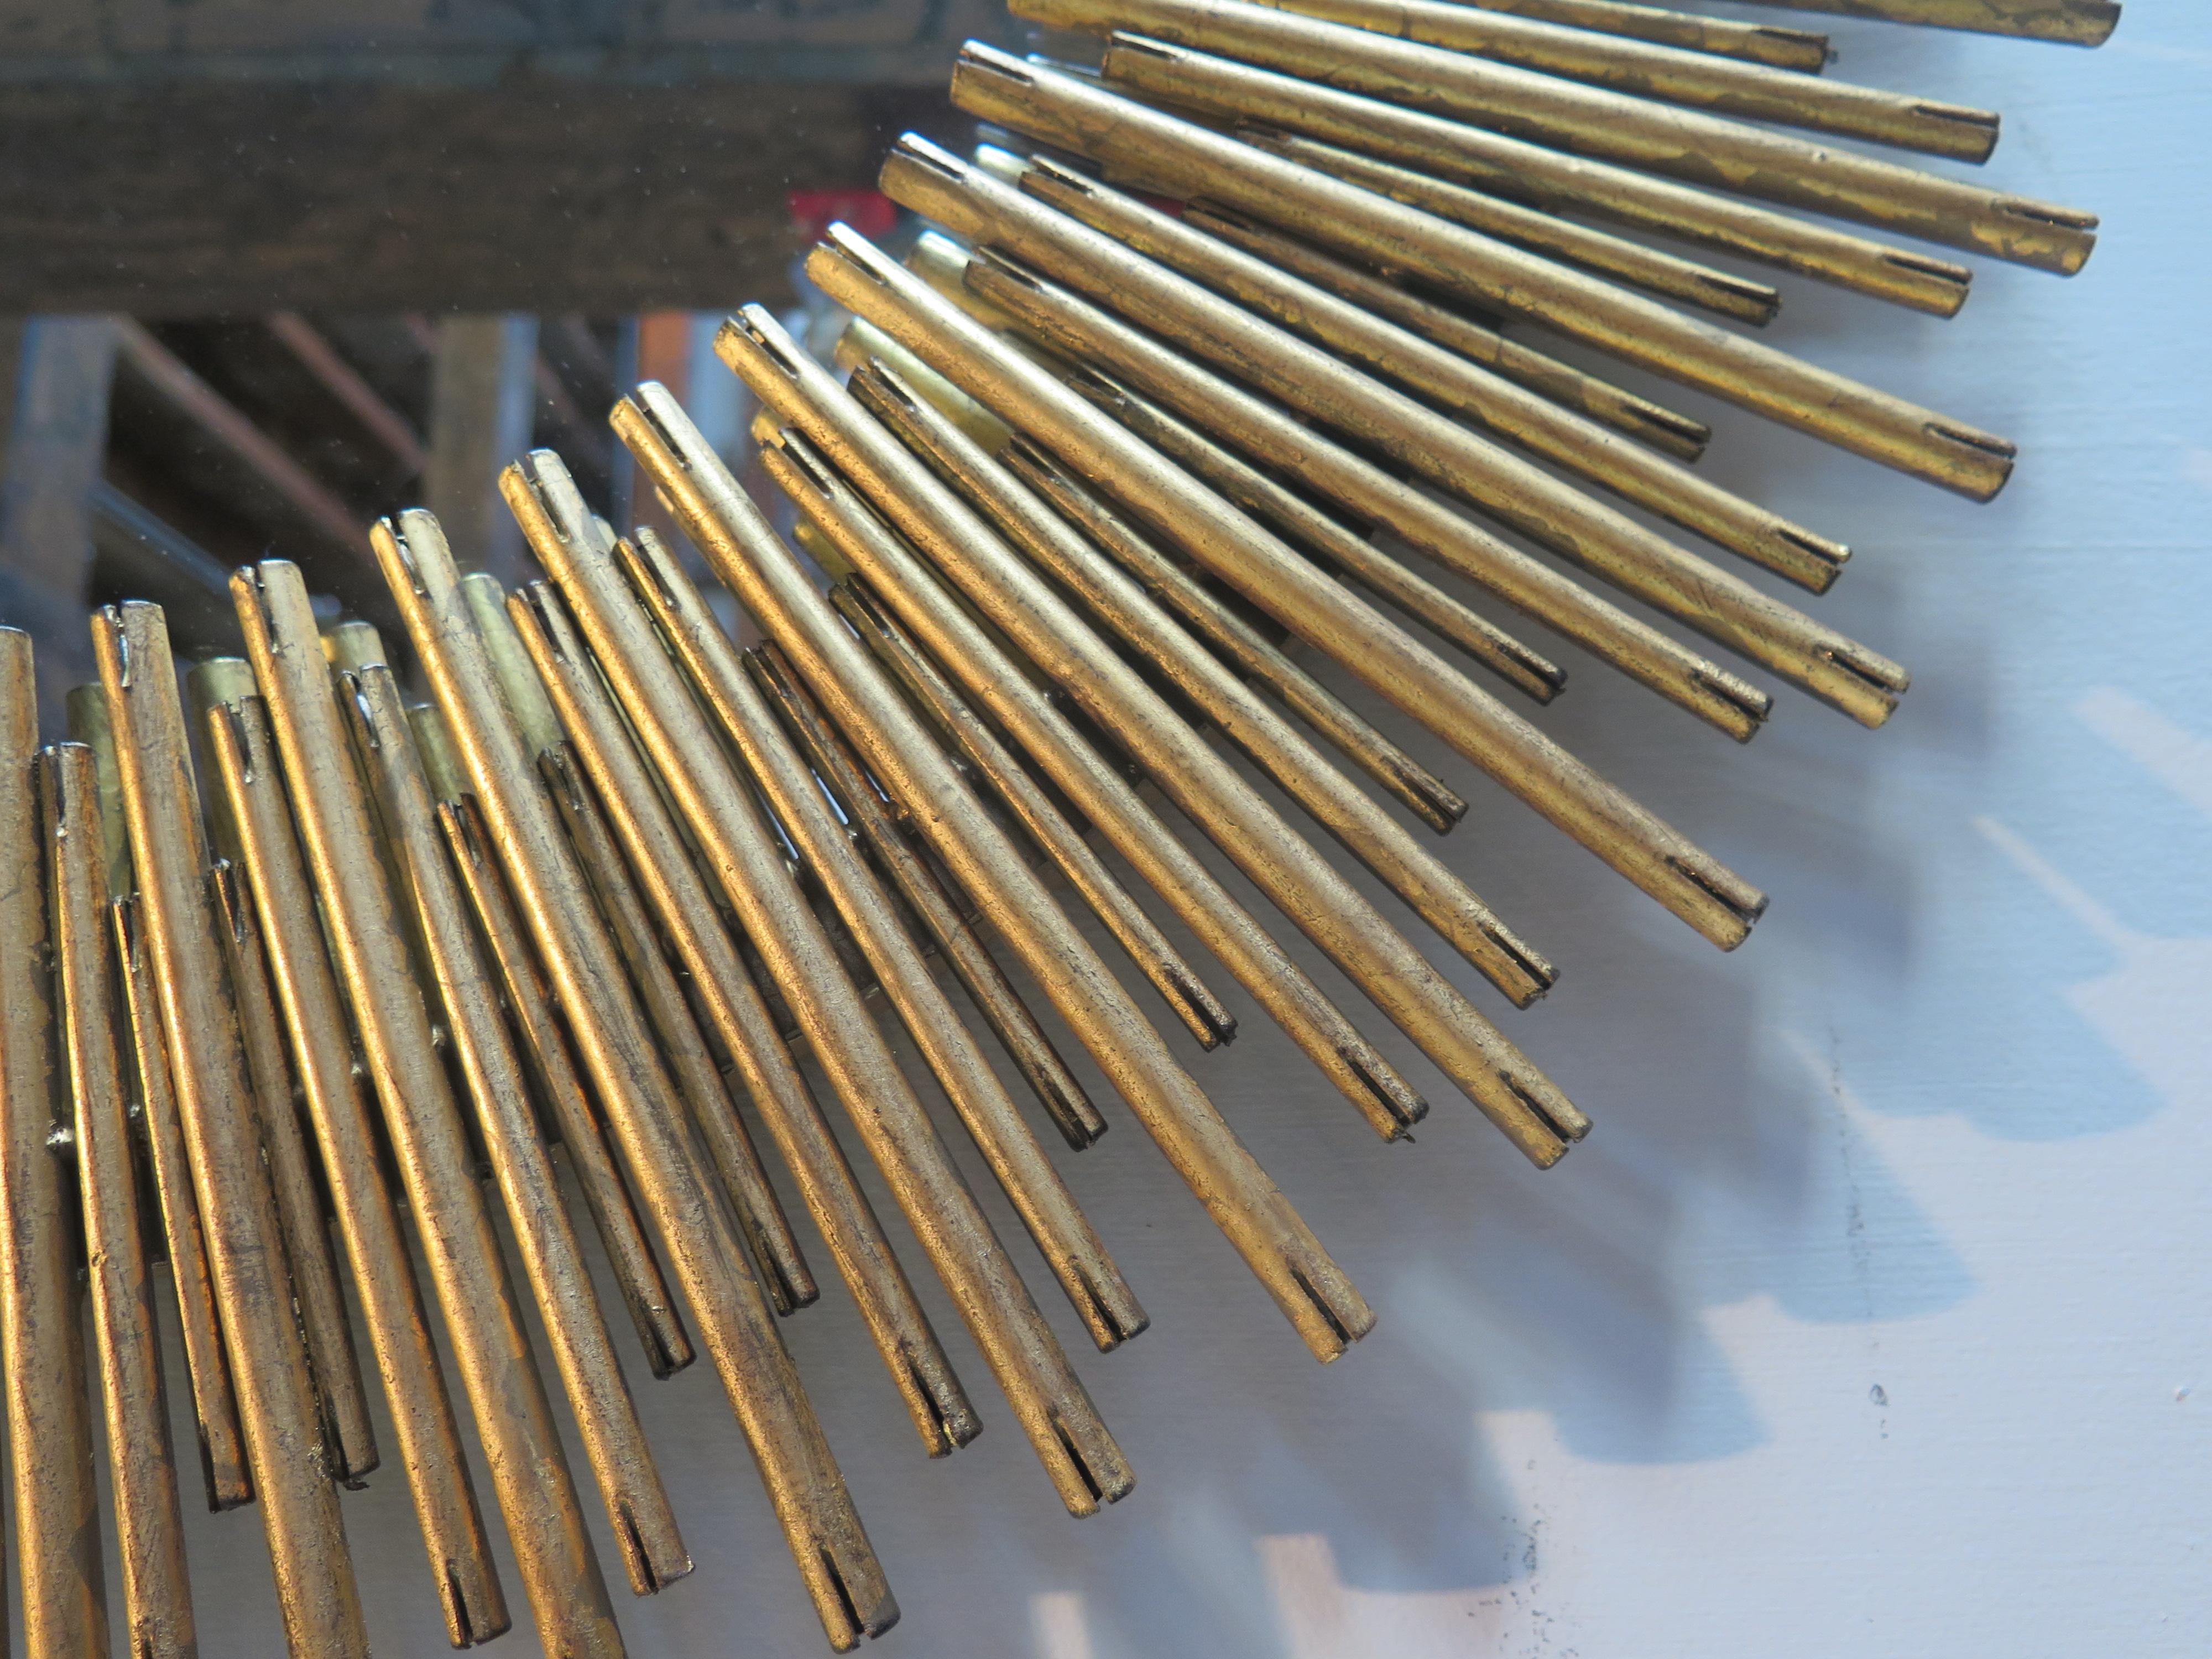 Arteriors Prescott gold oval mirror with rim of iron reeds.